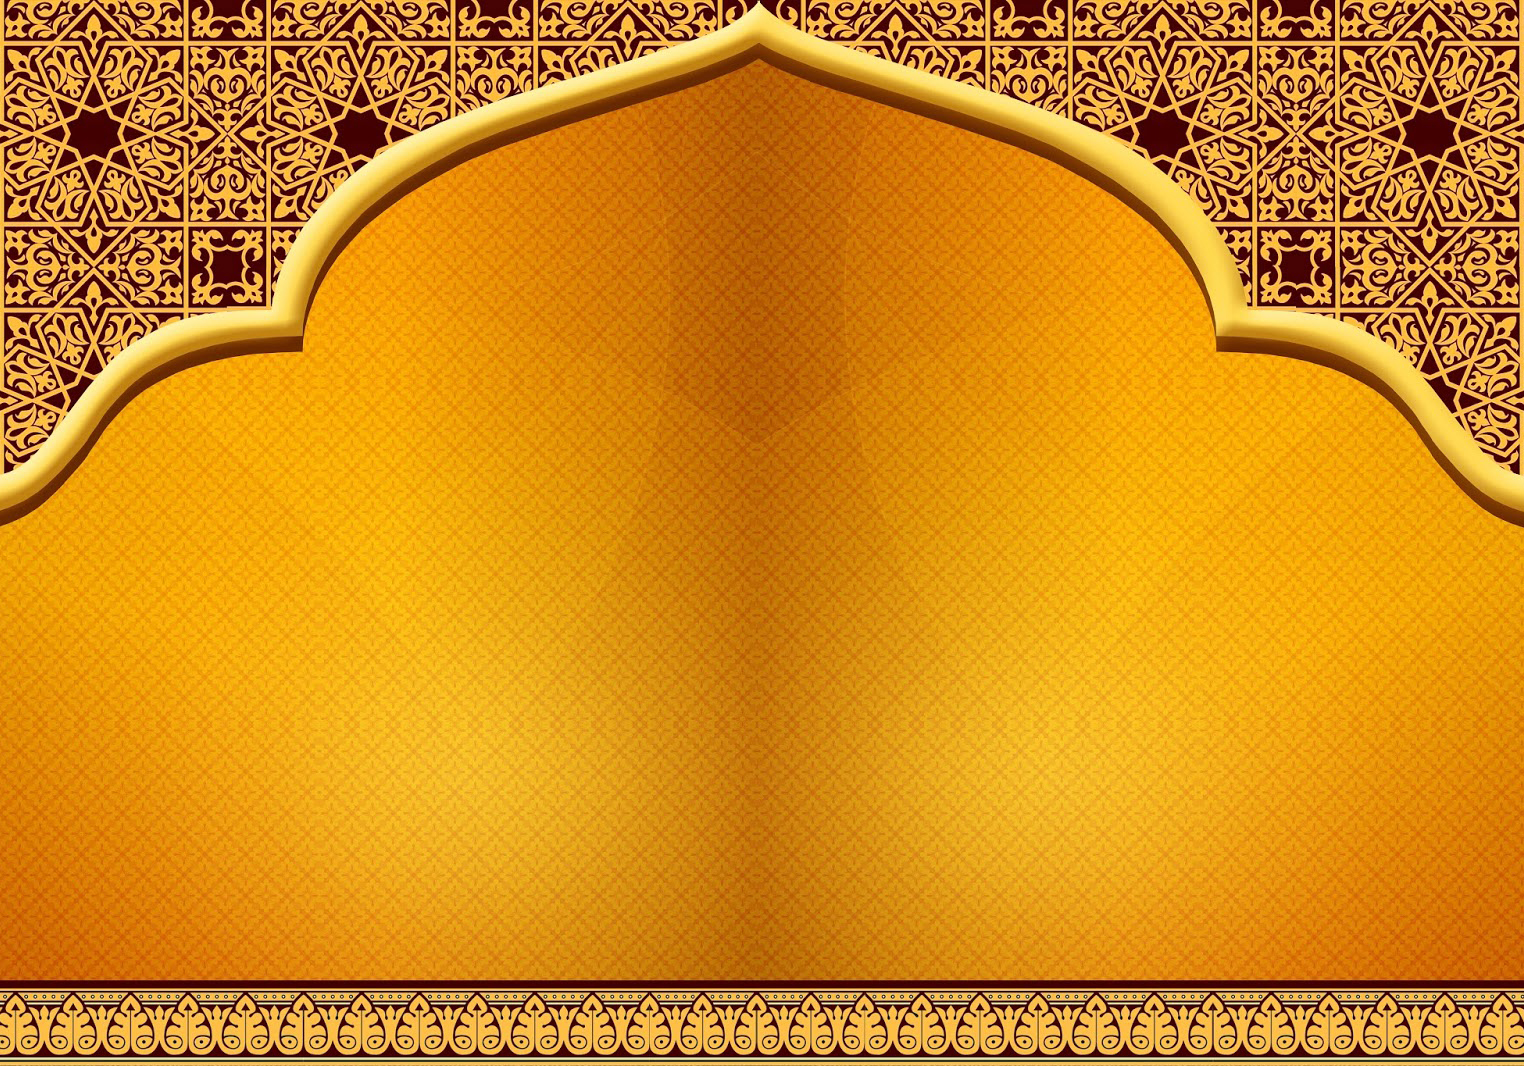 78+] Islamic Background Images - WallpaperSafari